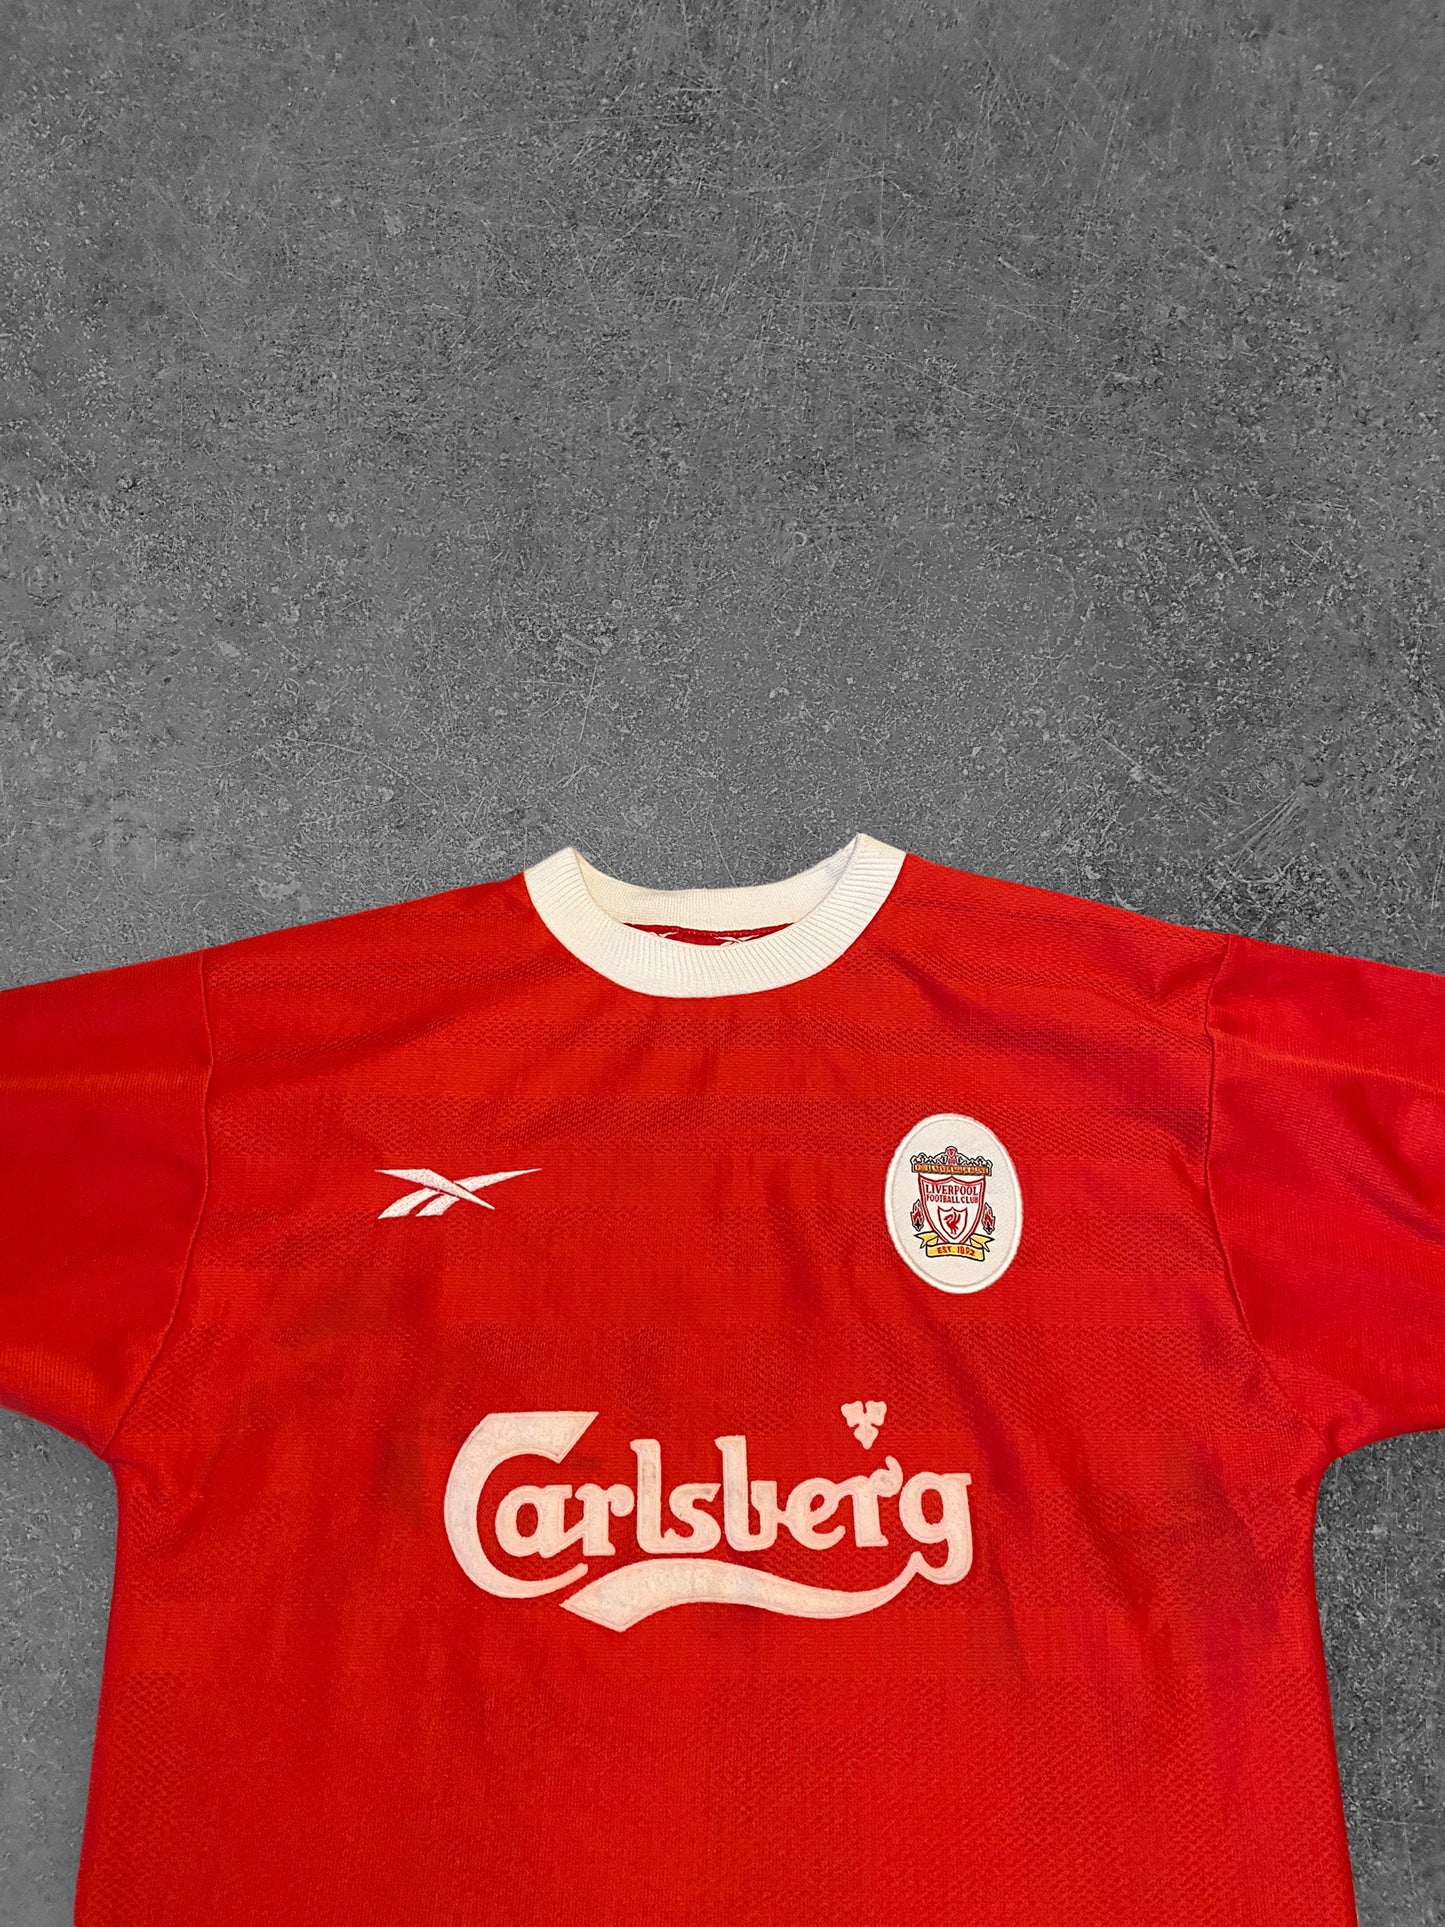 Liverpool Owen 1996 Pelipaita (S/M)